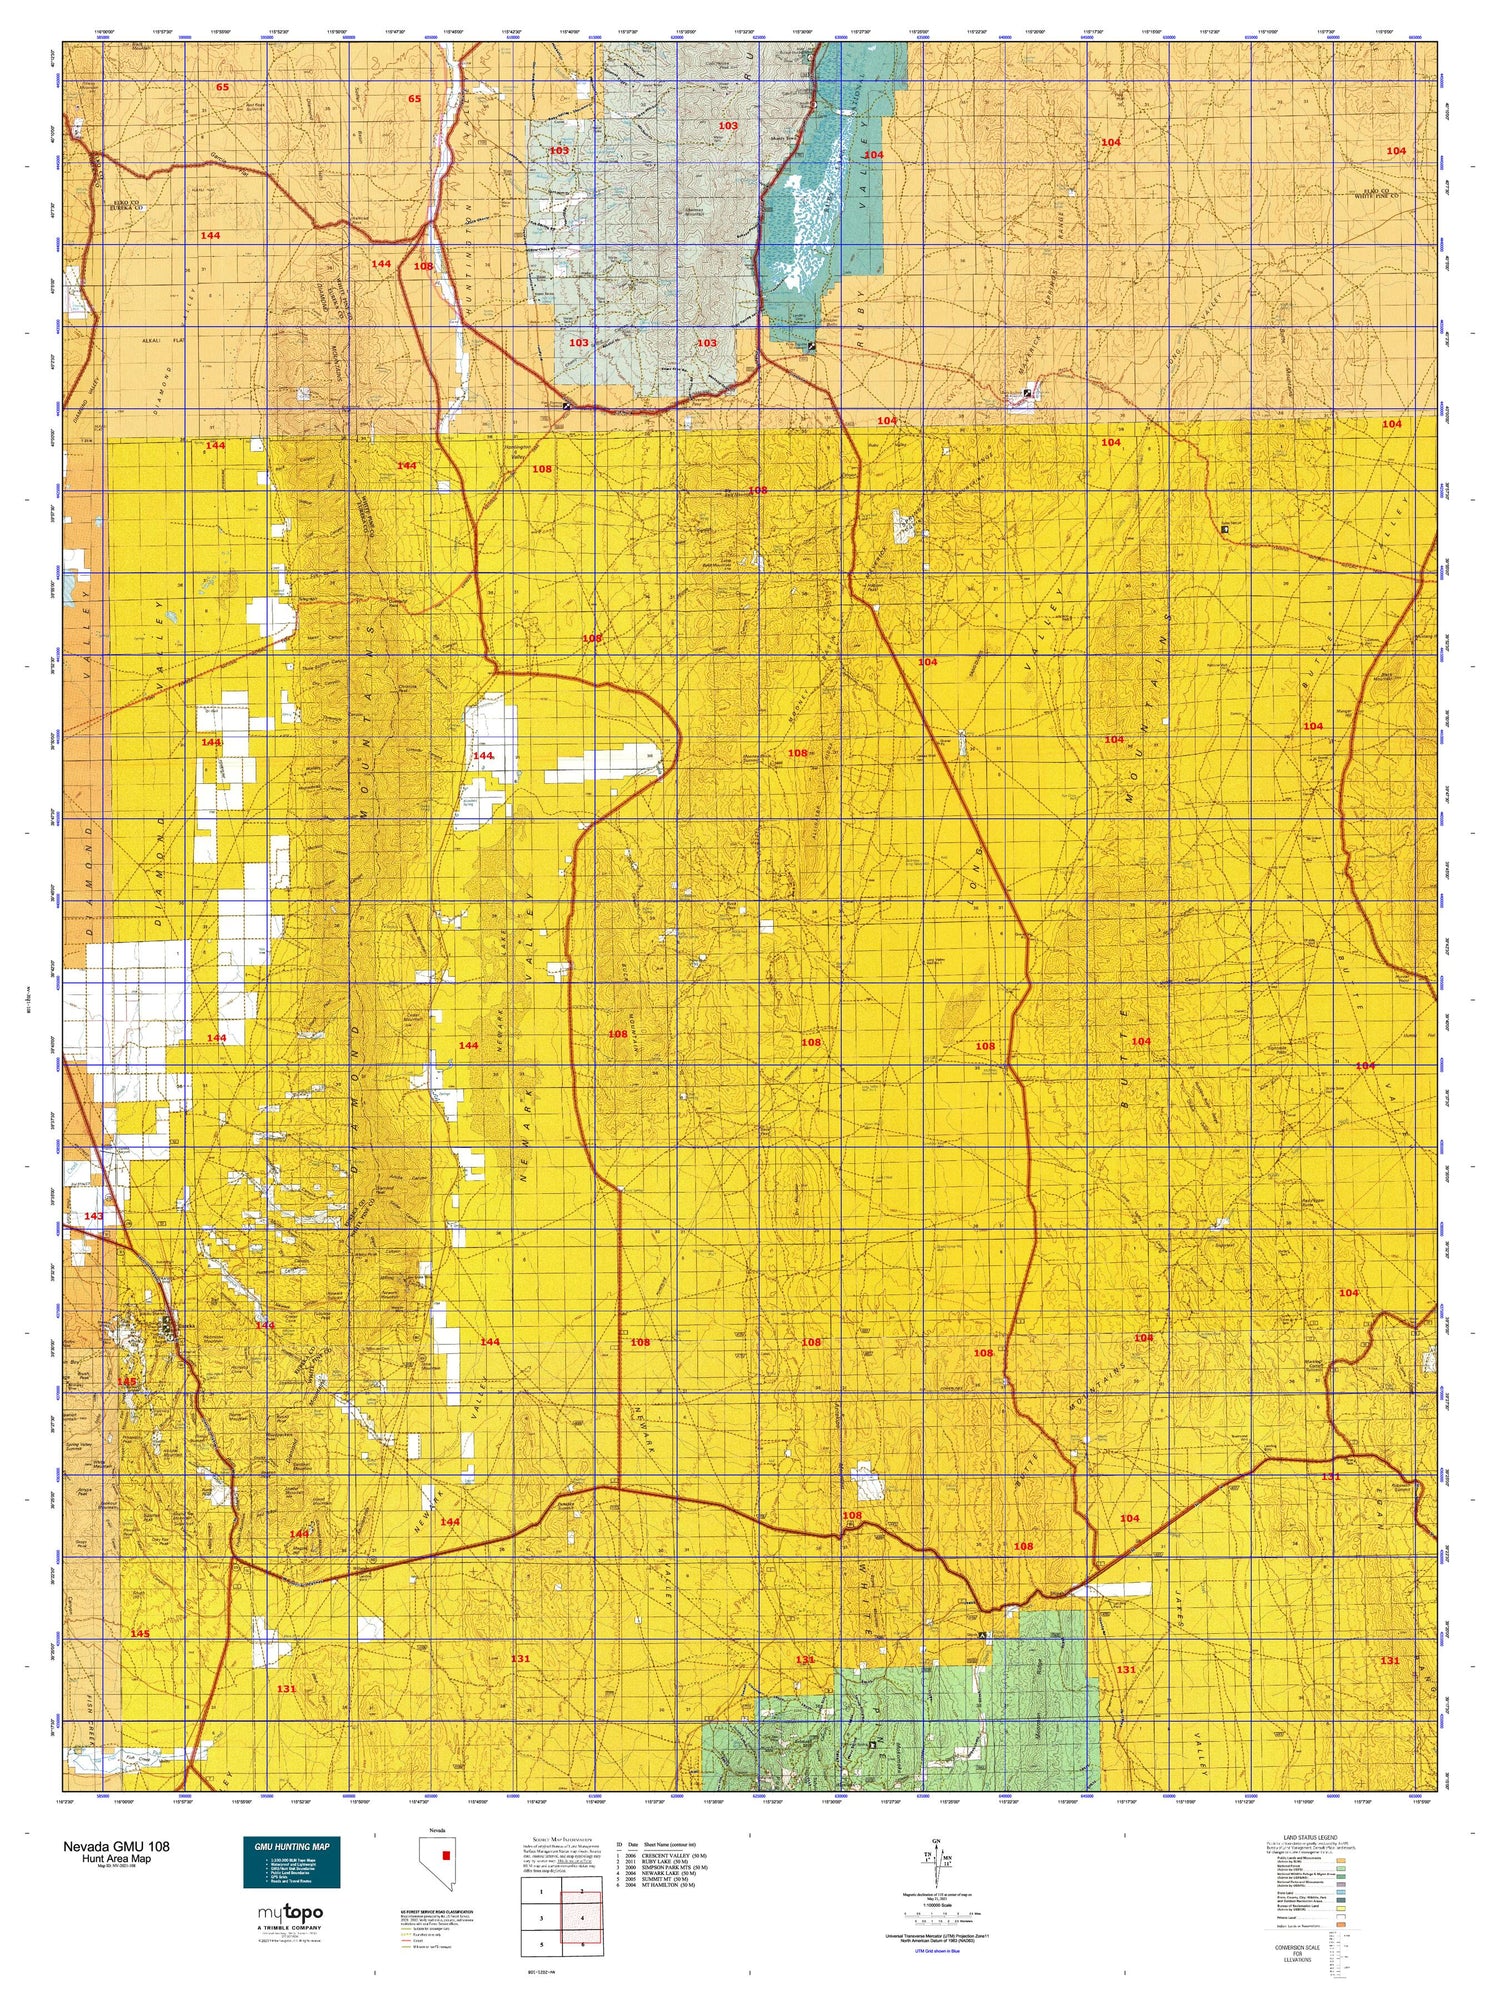 Nevada GMU 108 Map Image